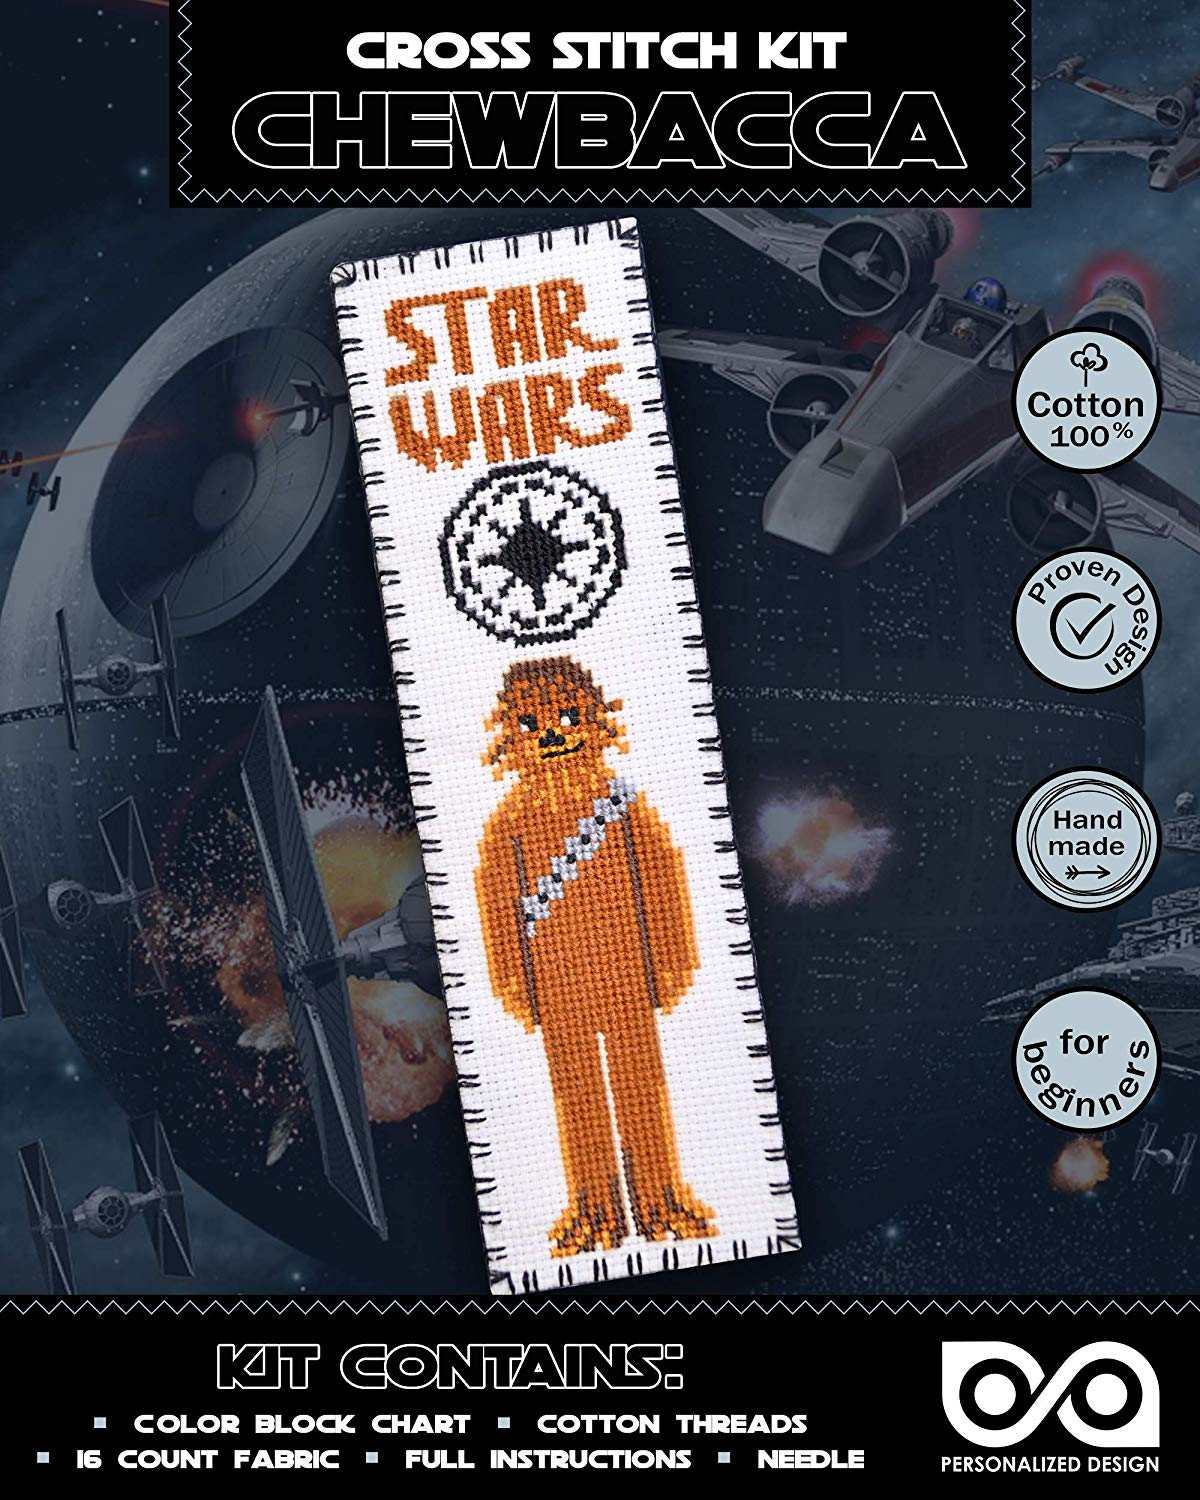 Cross Stitch Kits 'Star Wars' Chewbacca